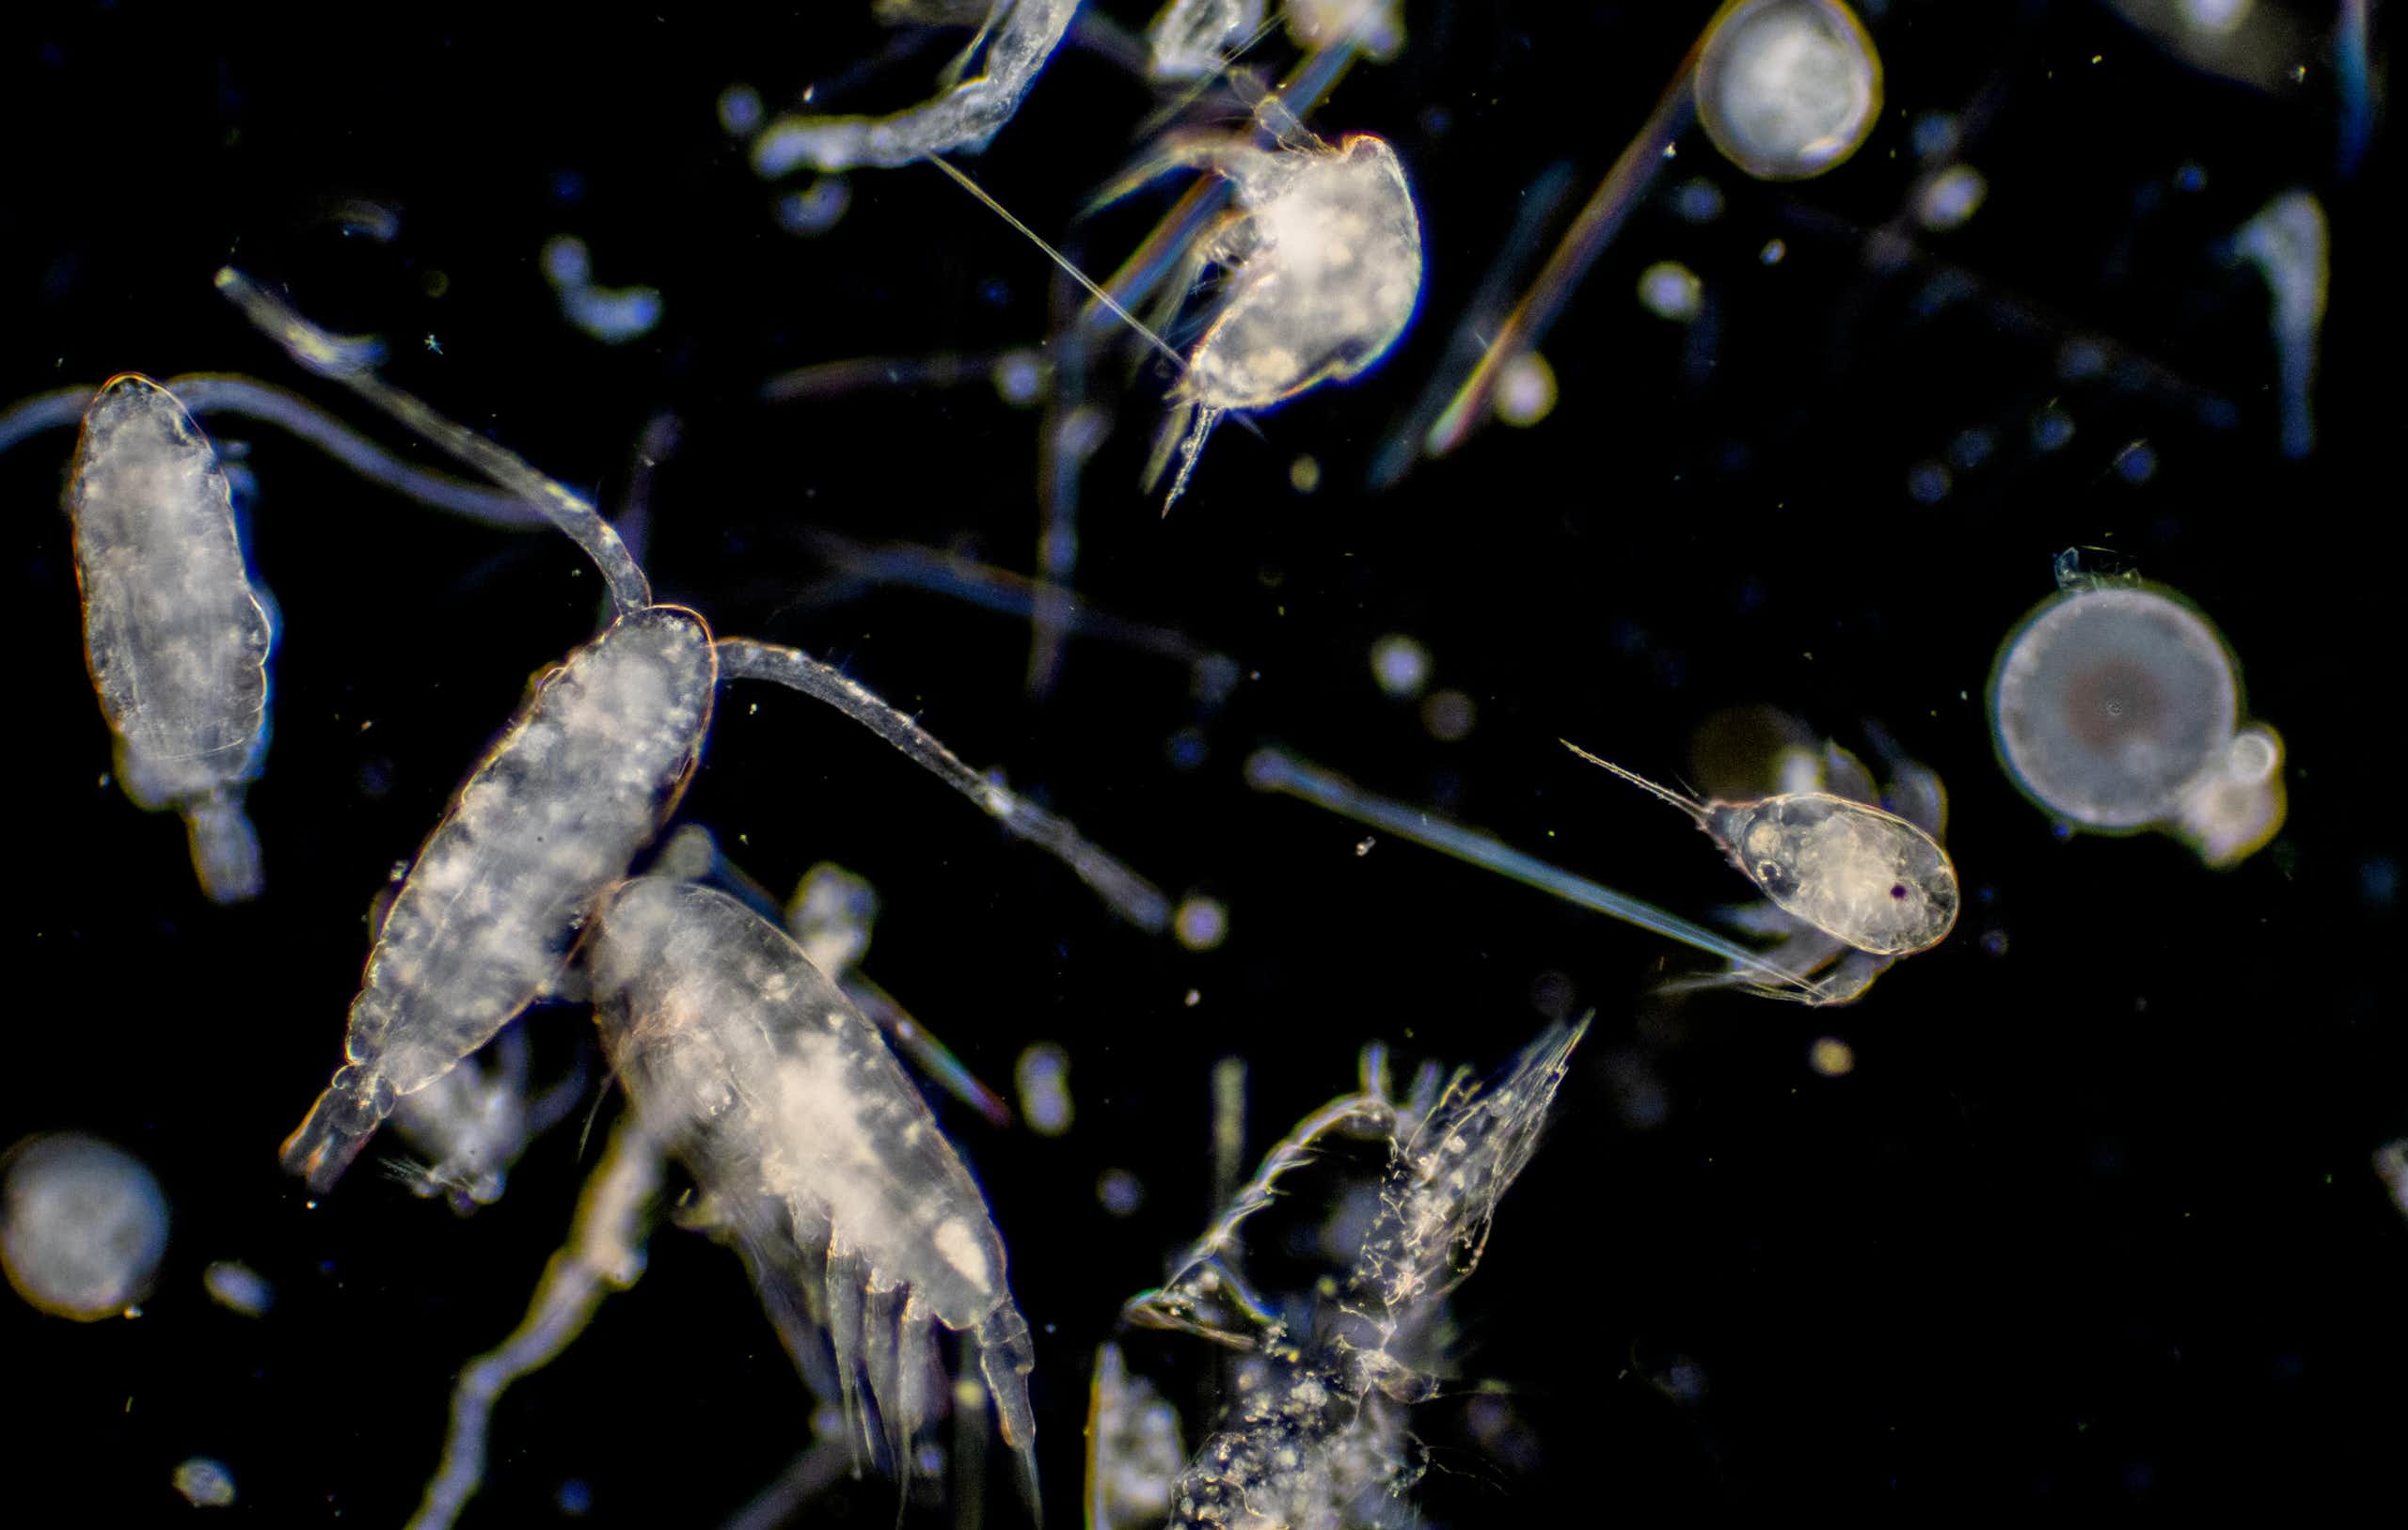 Tiny plankton drifting against black background. 